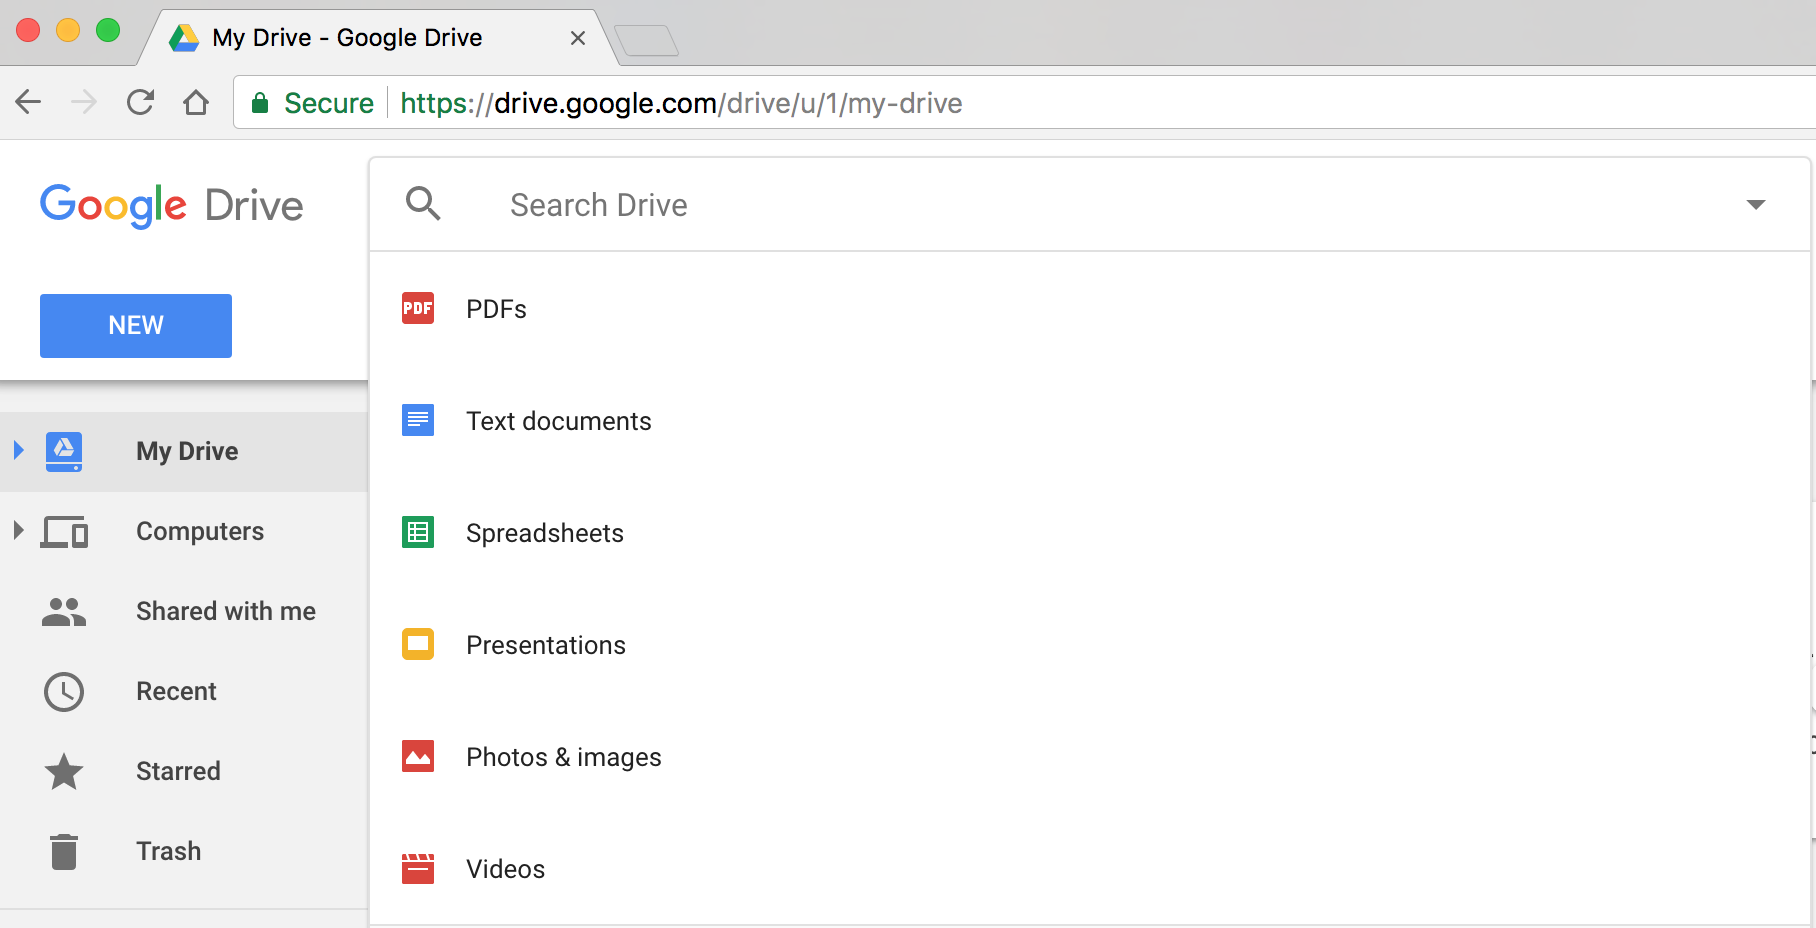 Google Drive search